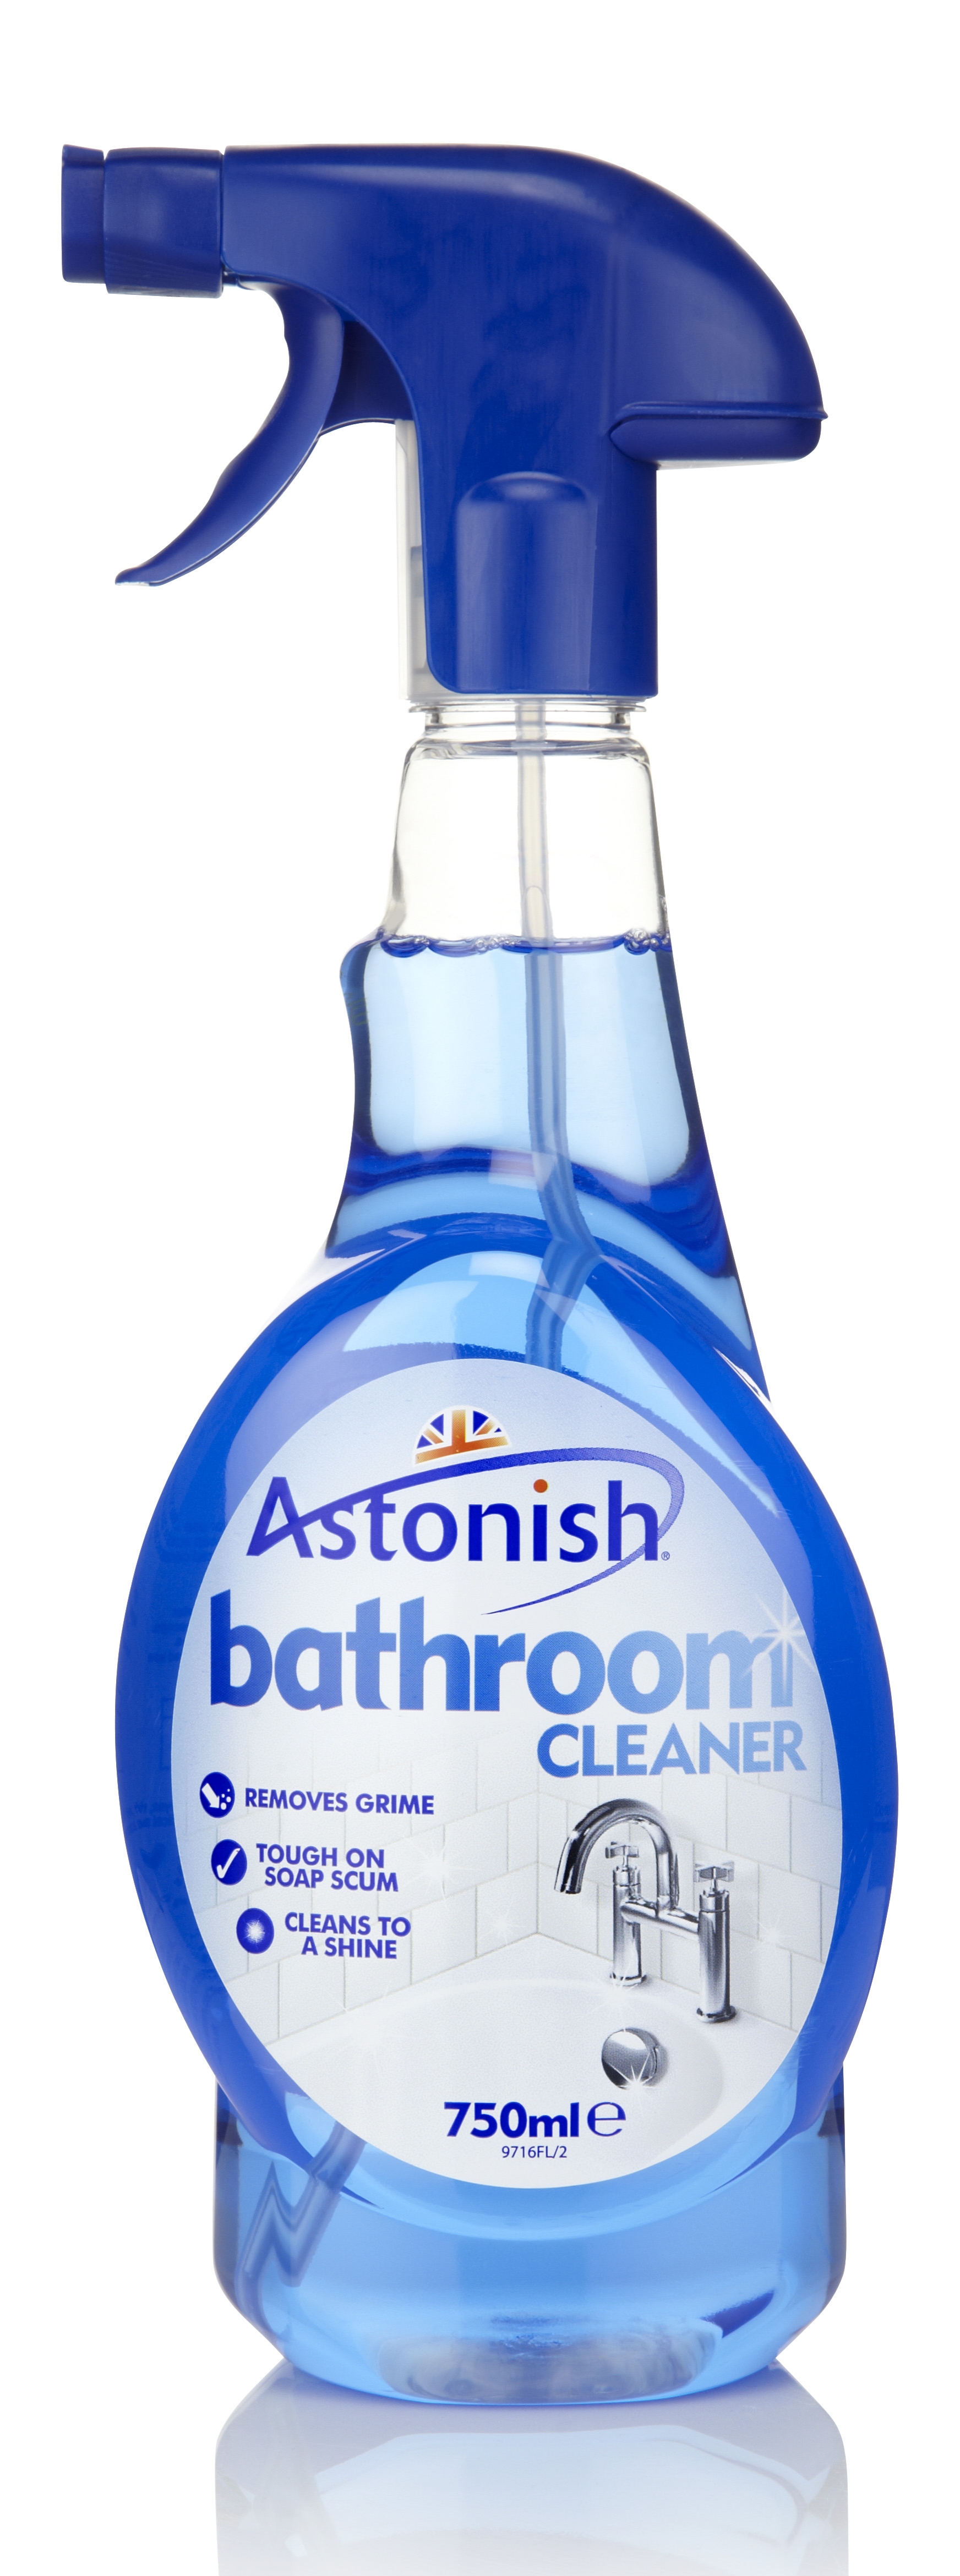 Astonish Bathroom Cleaner 750ml trigger.jpg